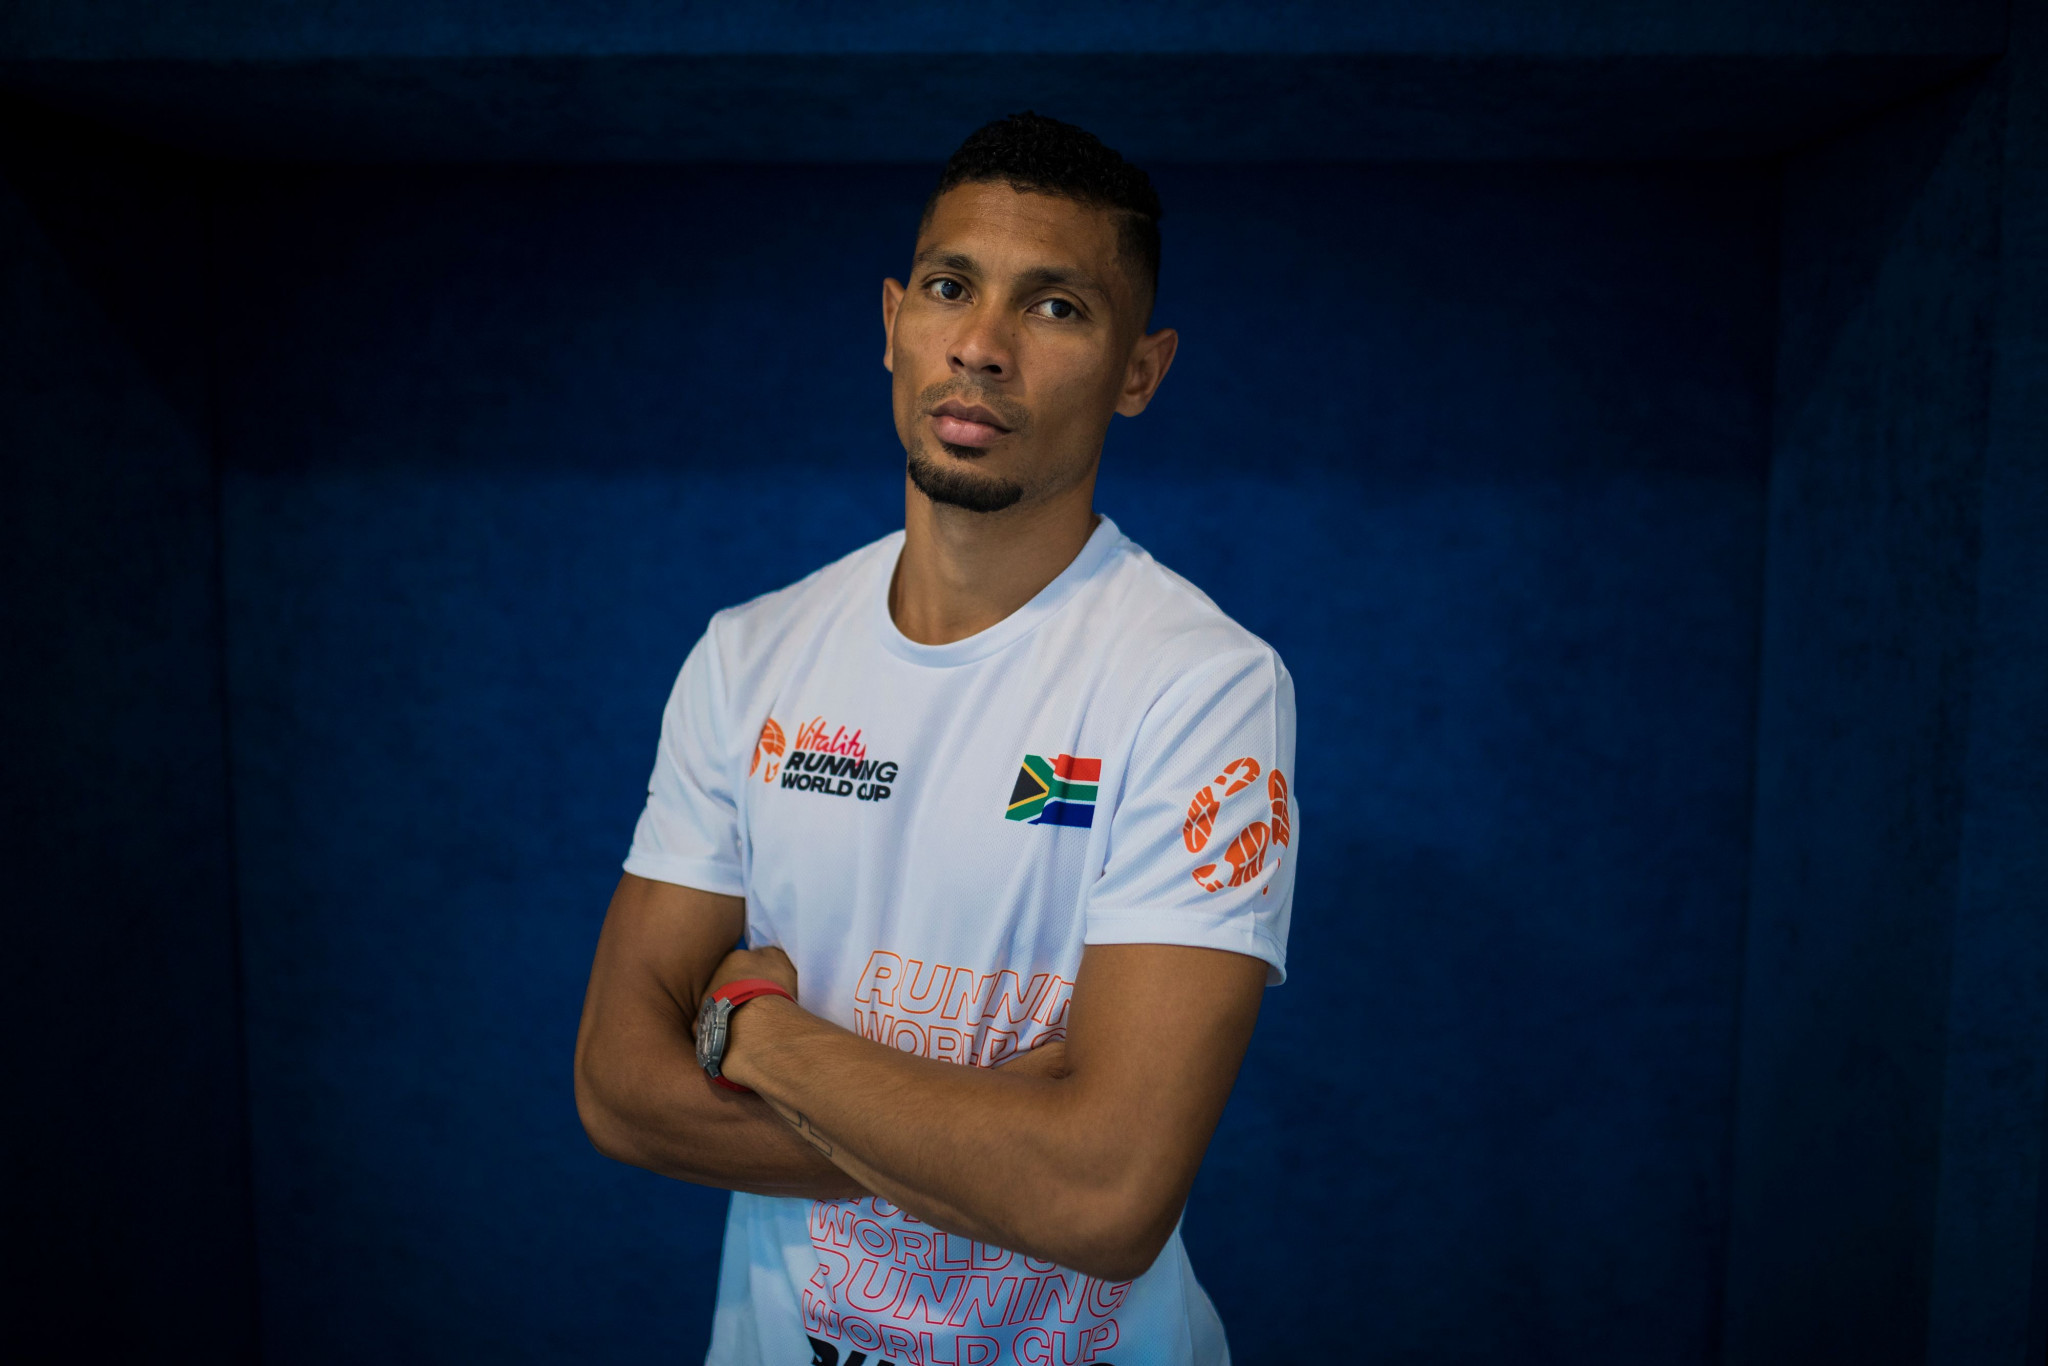 Wayde van Niekerk was one of the stars of the Rio 2016 Olympics ©Getty Images